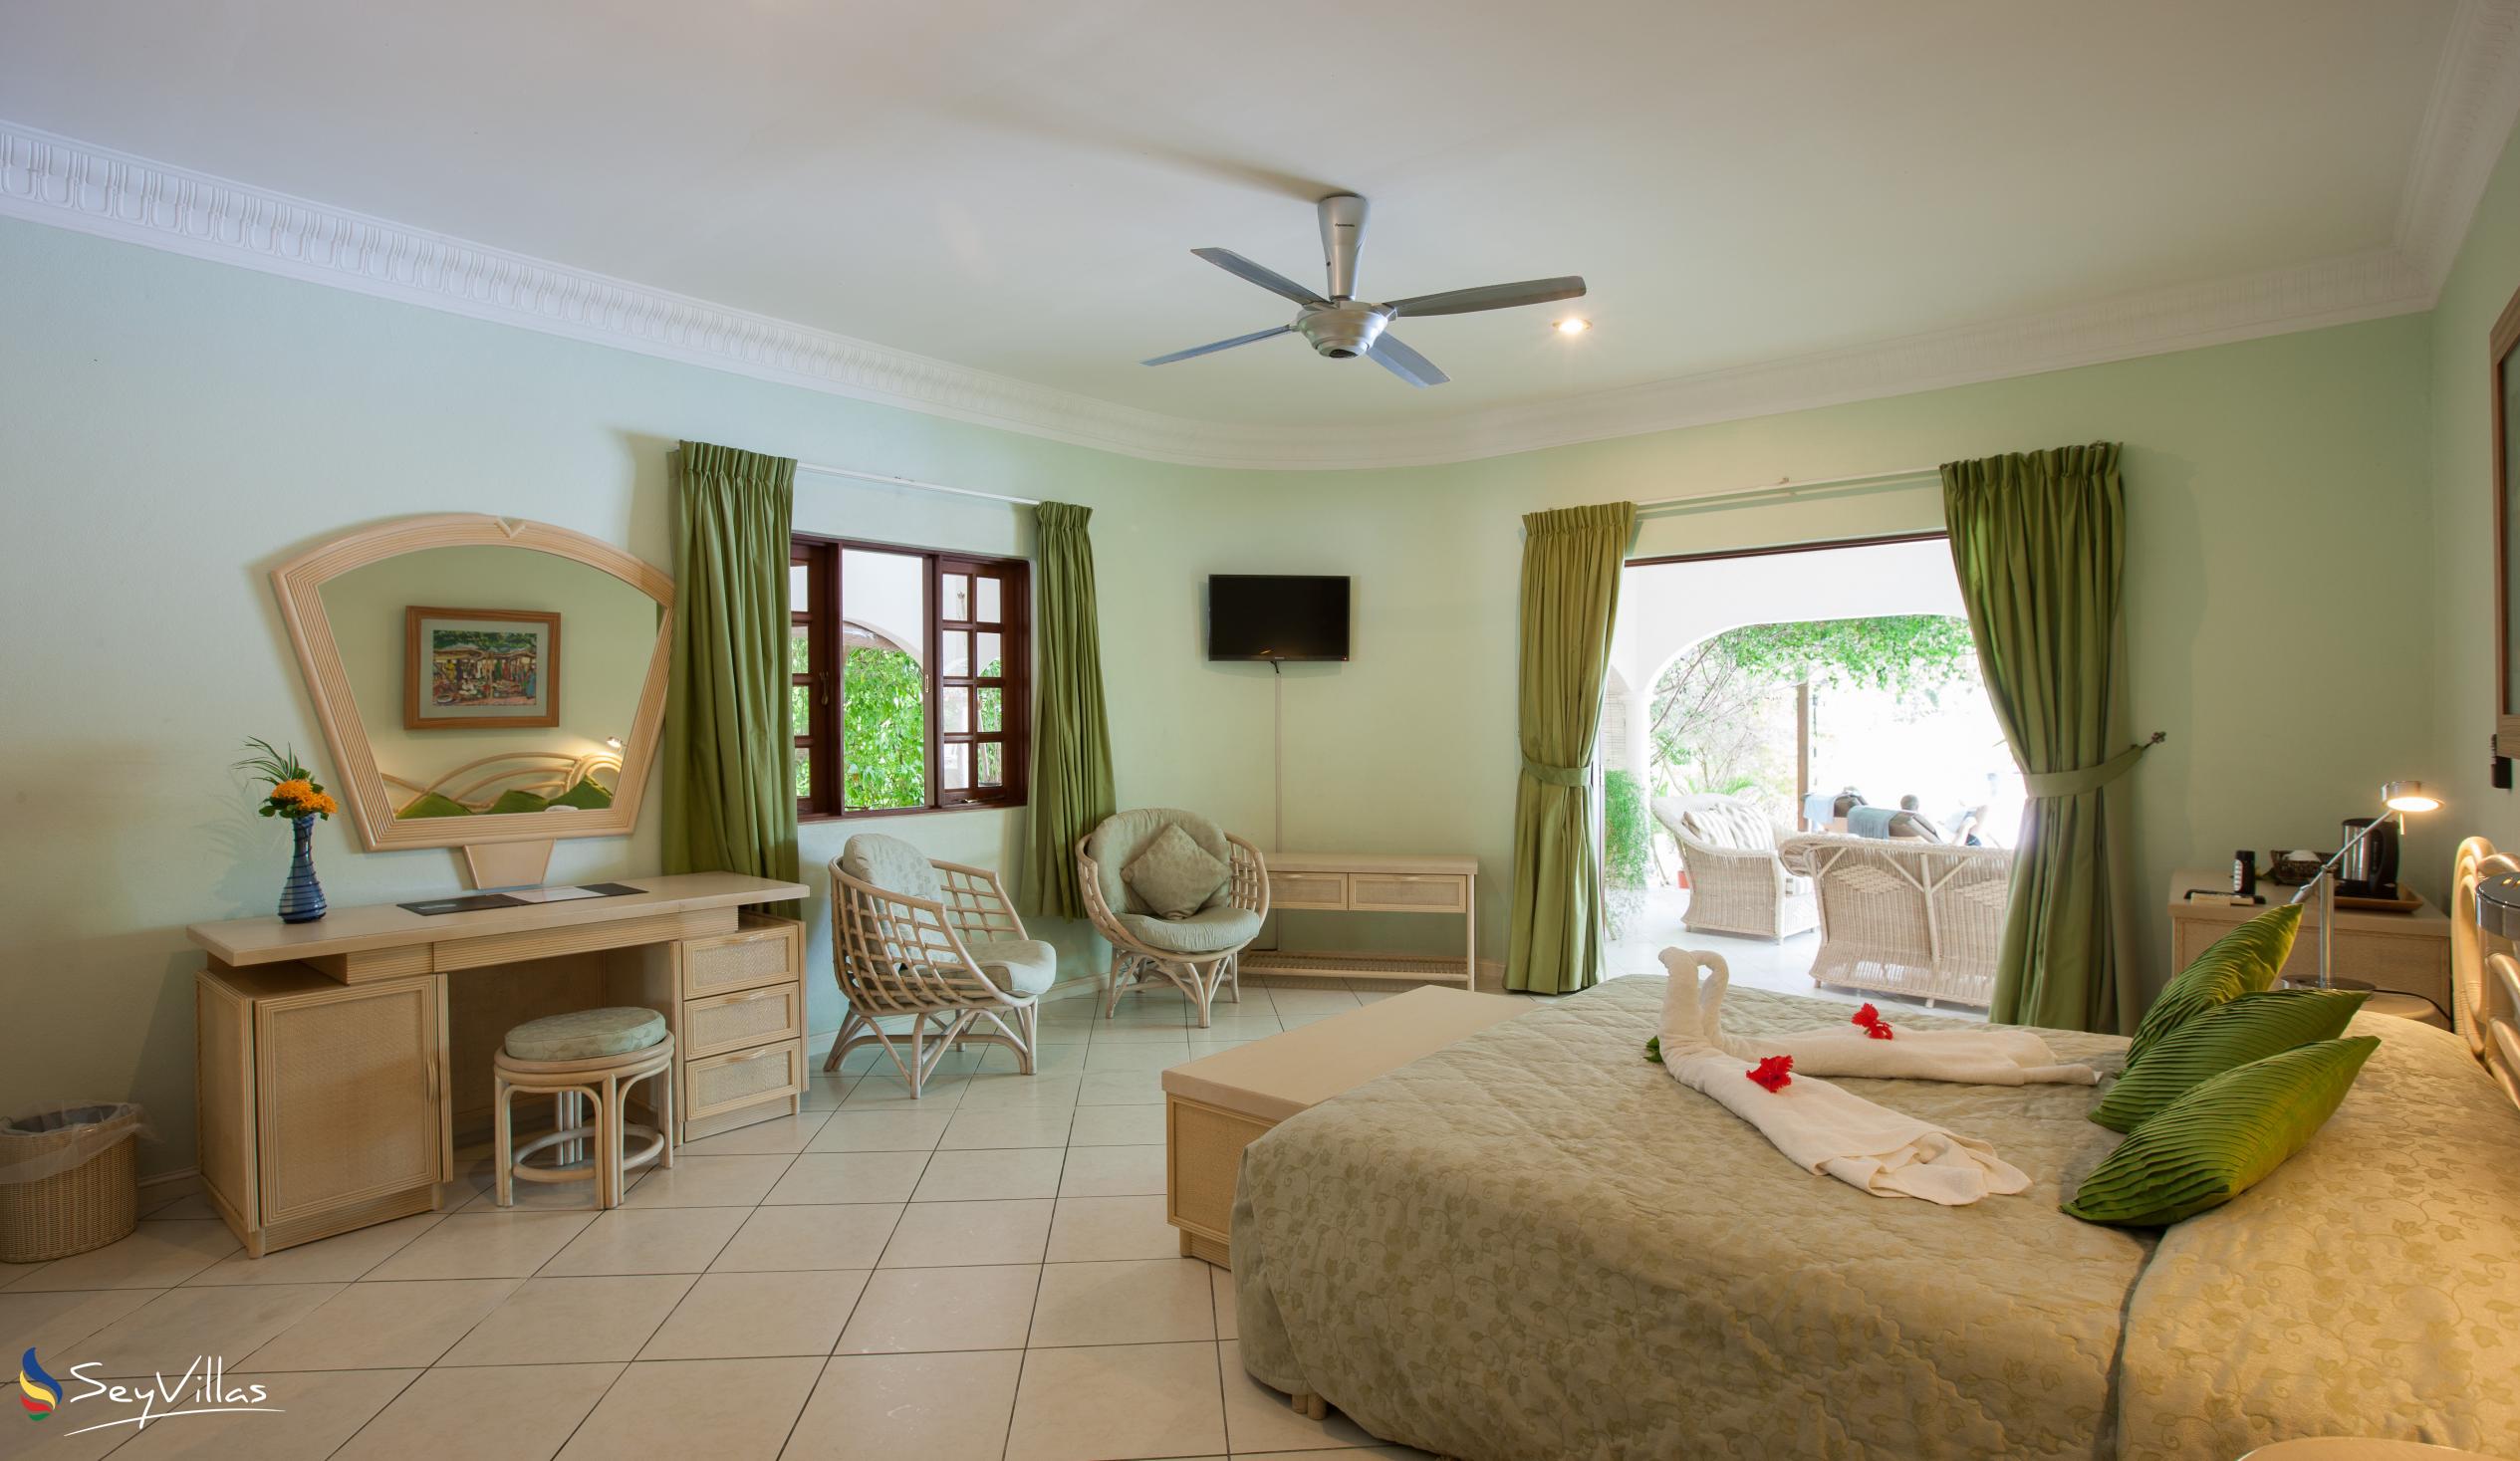 Foto 56: Villa de Cerf - Doppelzimmer - Cerf Island (Seychellen)